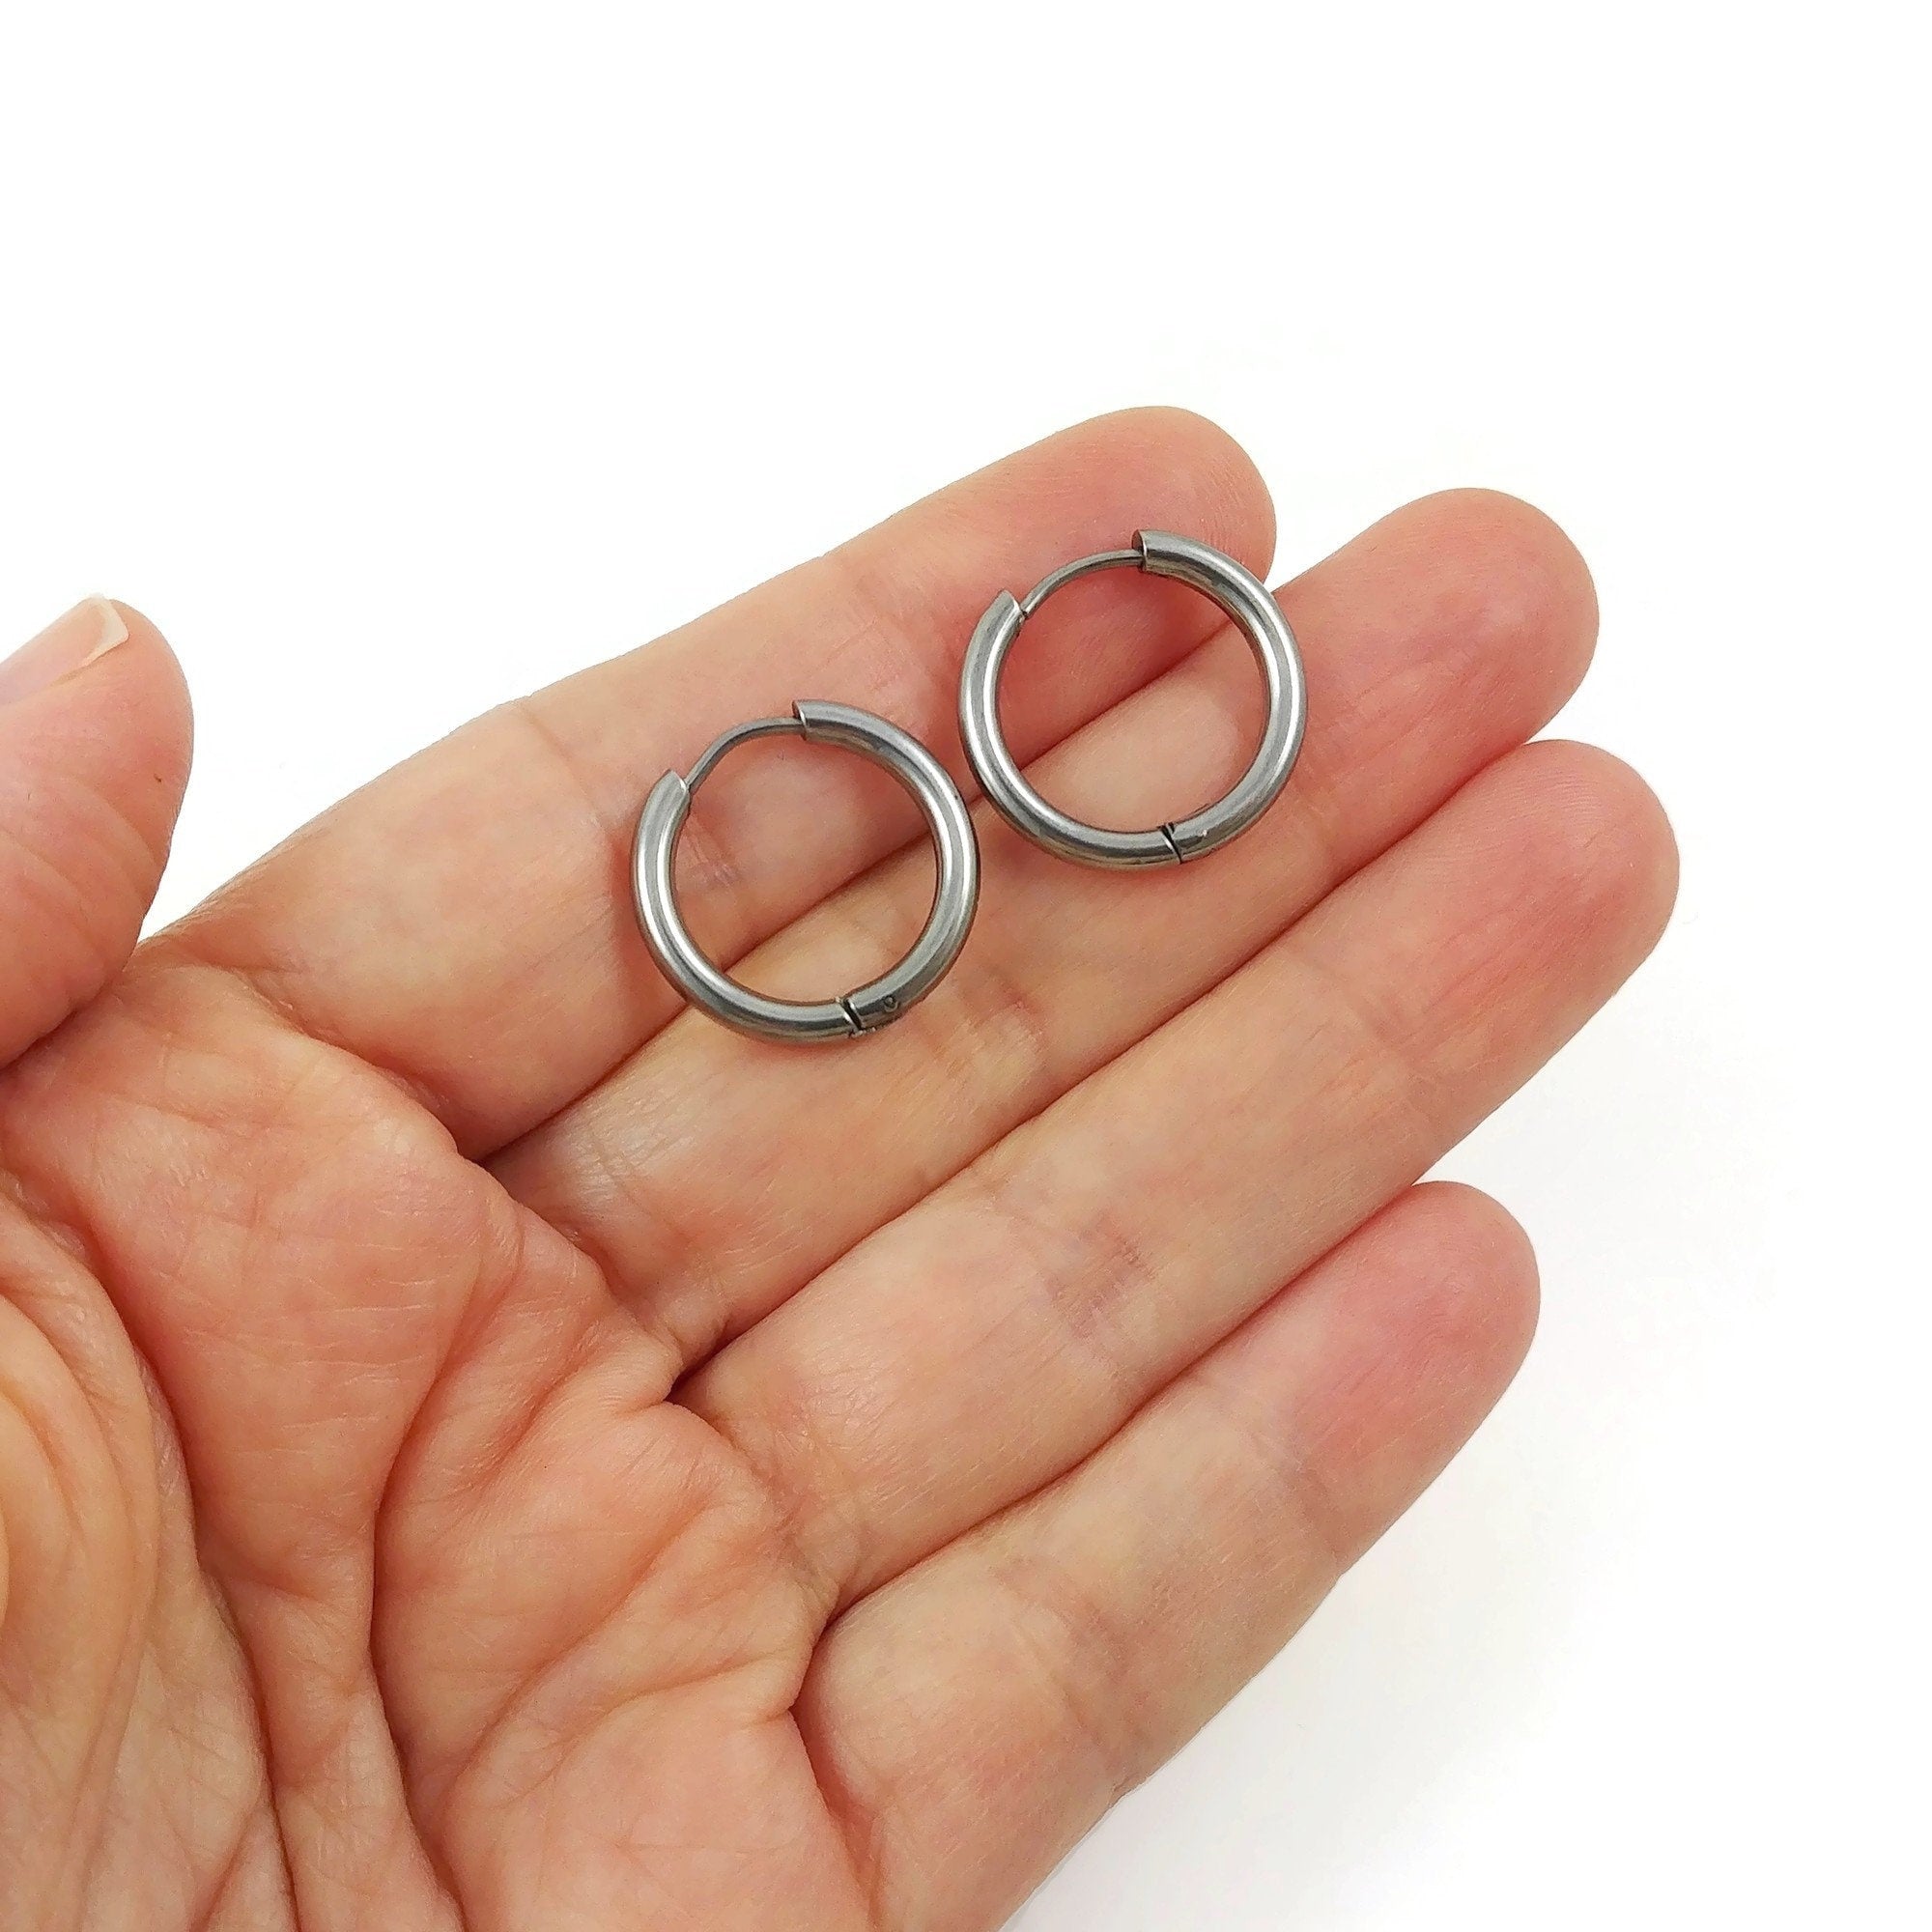 Stainless steel huggie hoops, Hypoallergenic earring findings, Silver earring hoops, 3 sizes available